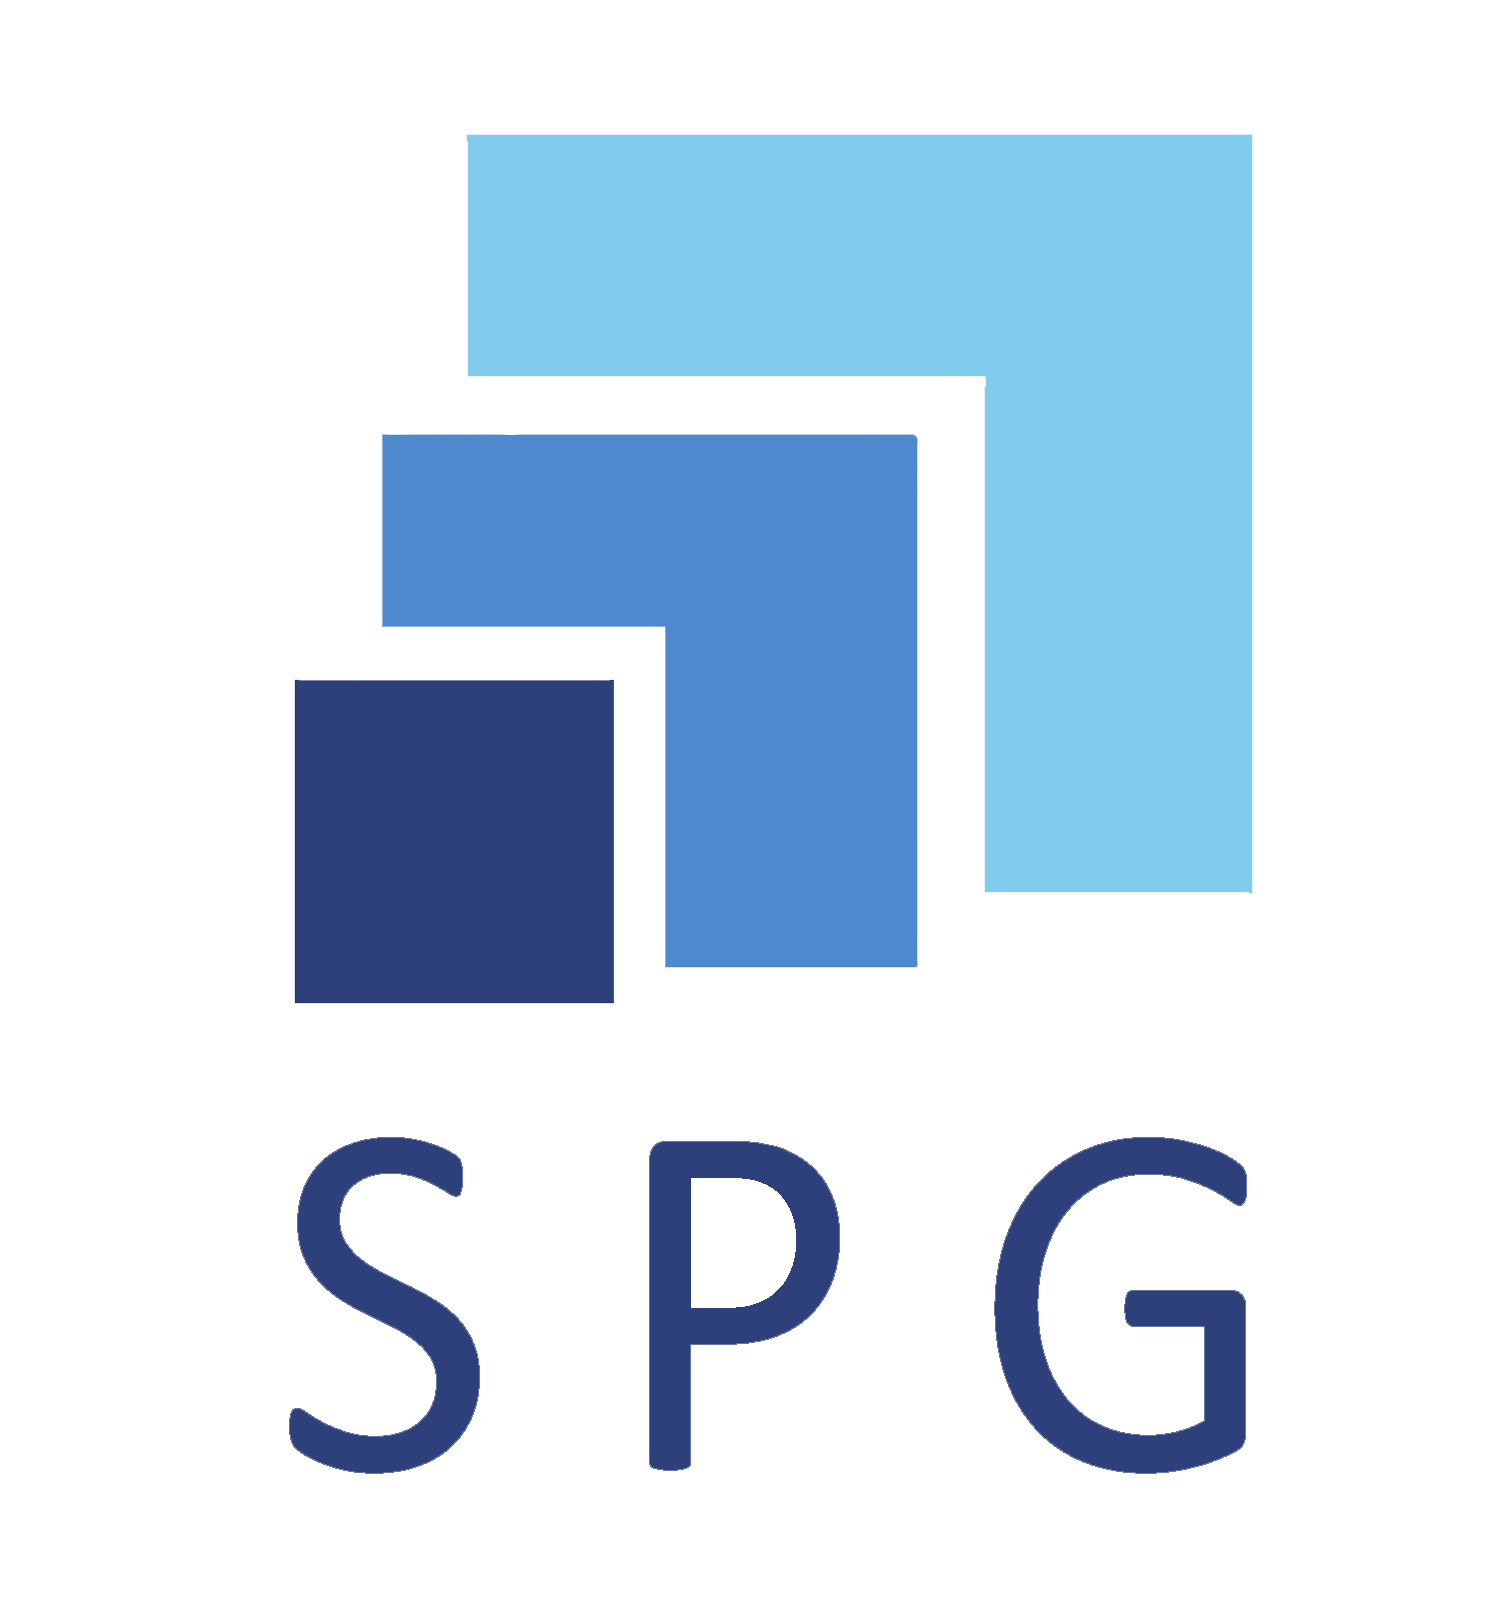 Spg constructions logo photo